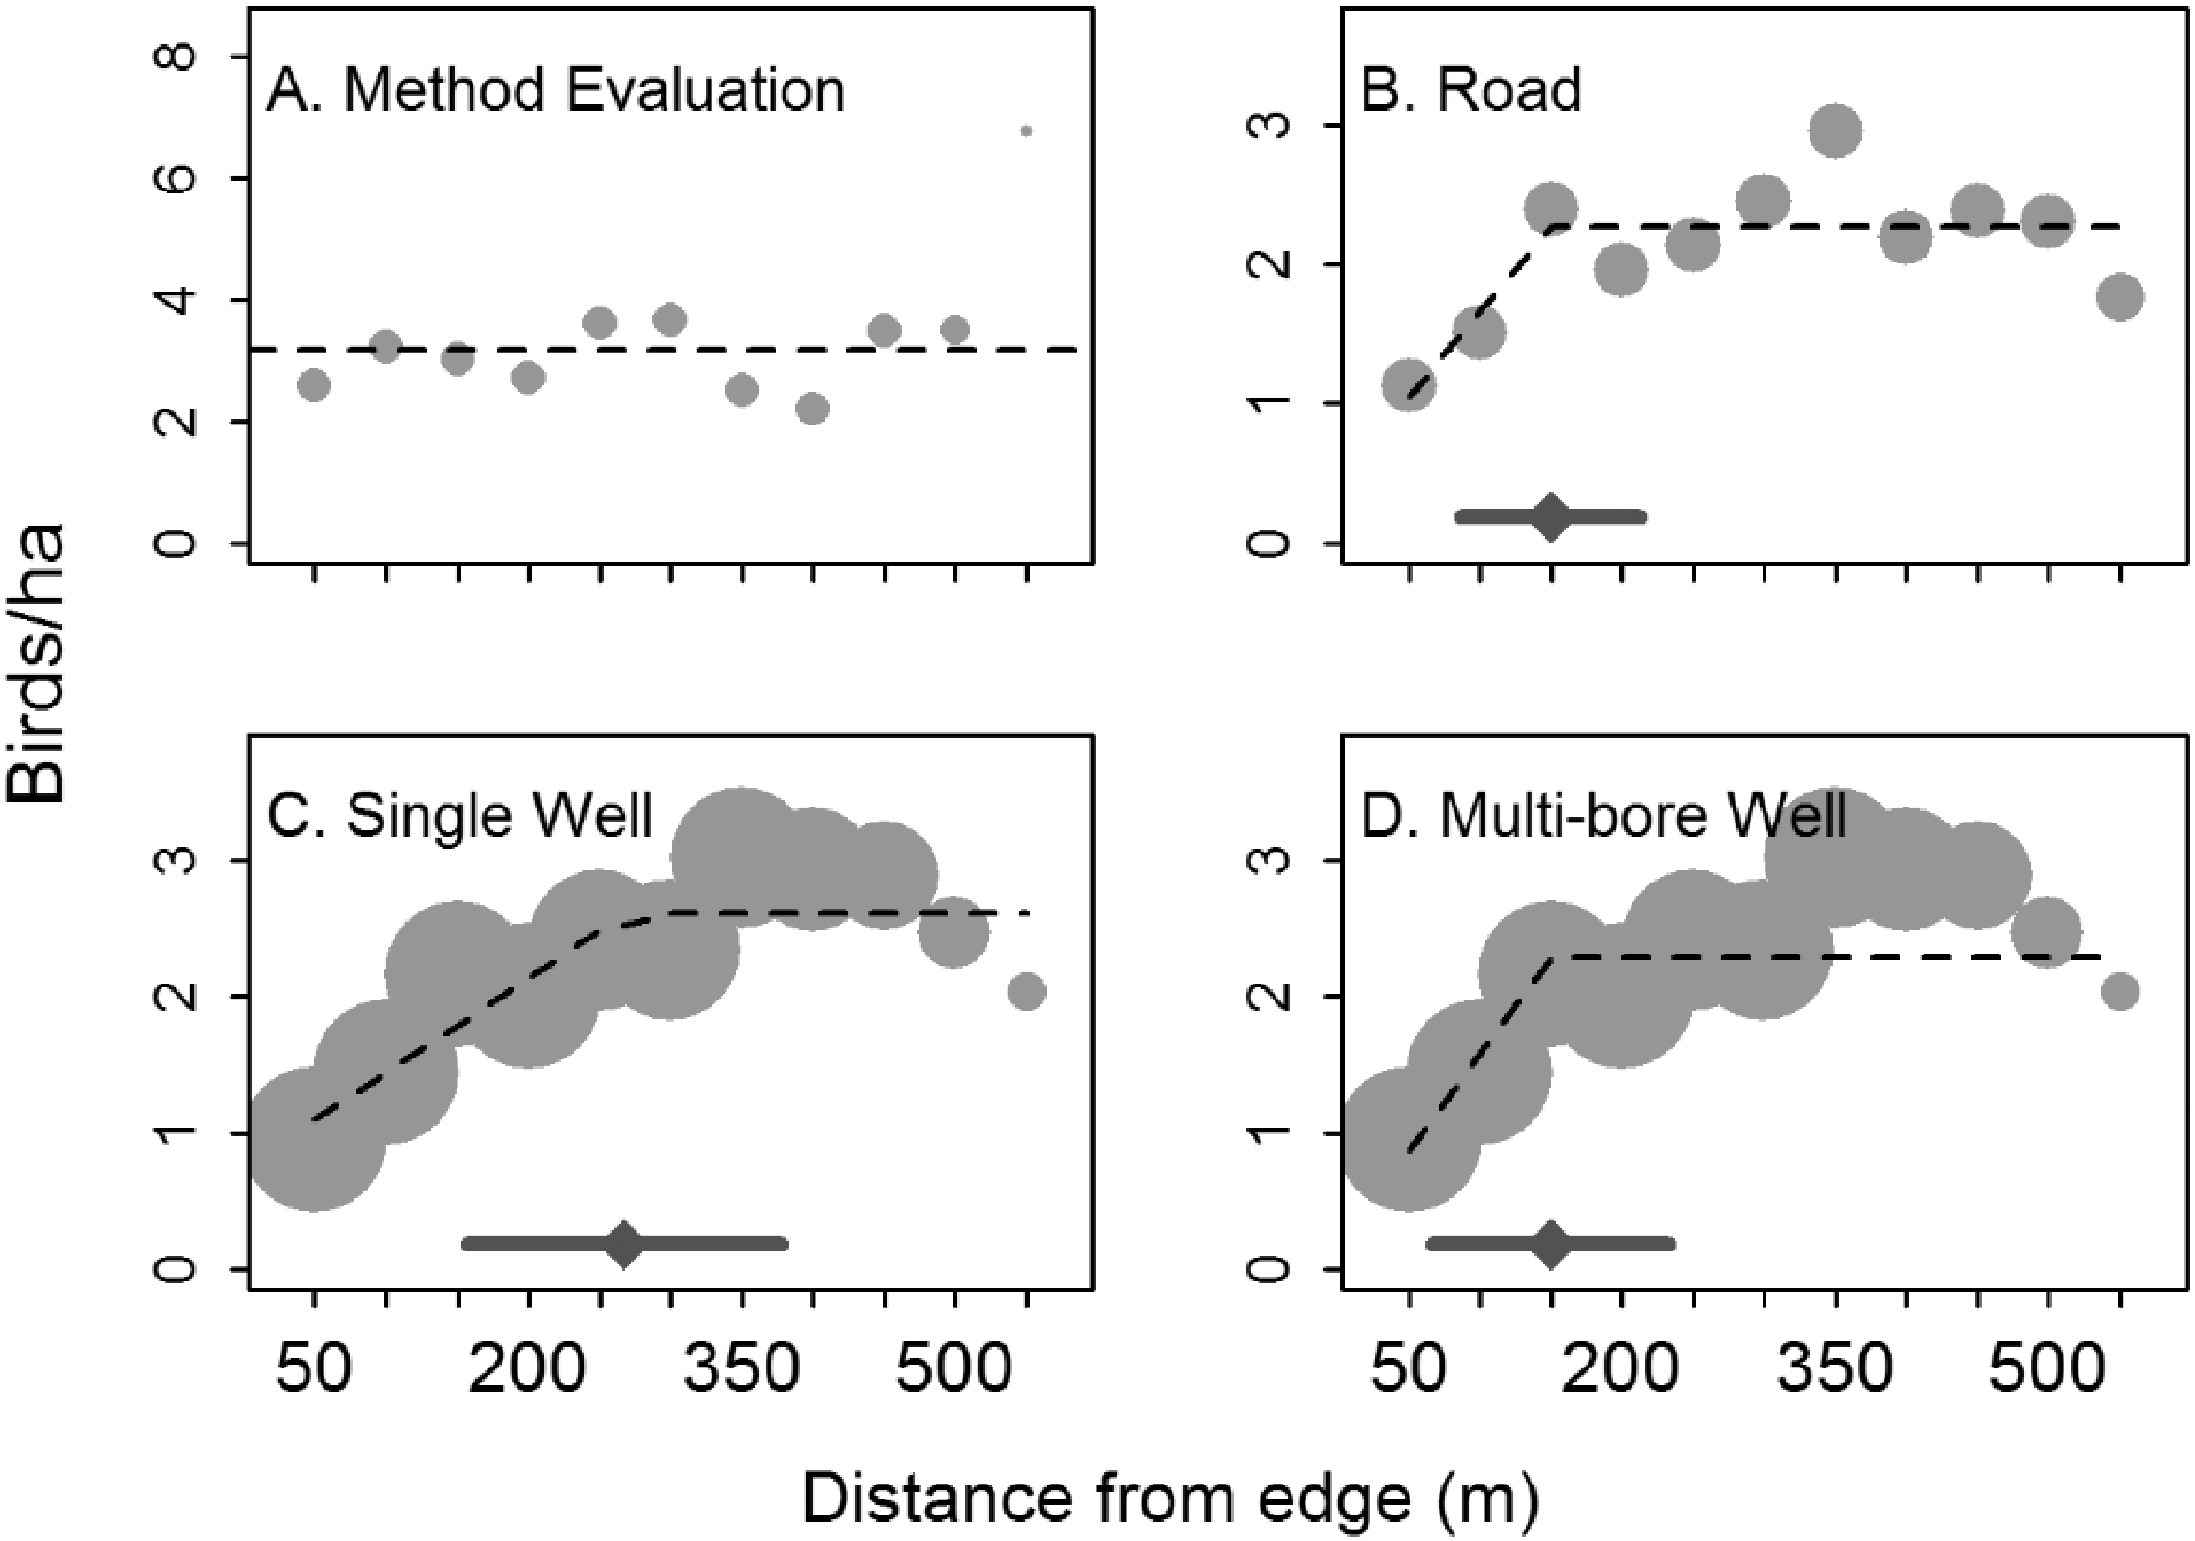 Figure 2 from Thompson et al. (2015) describing models used to explore the effect of oil and gas disturbance on grassland bird abundance in North Dakota.